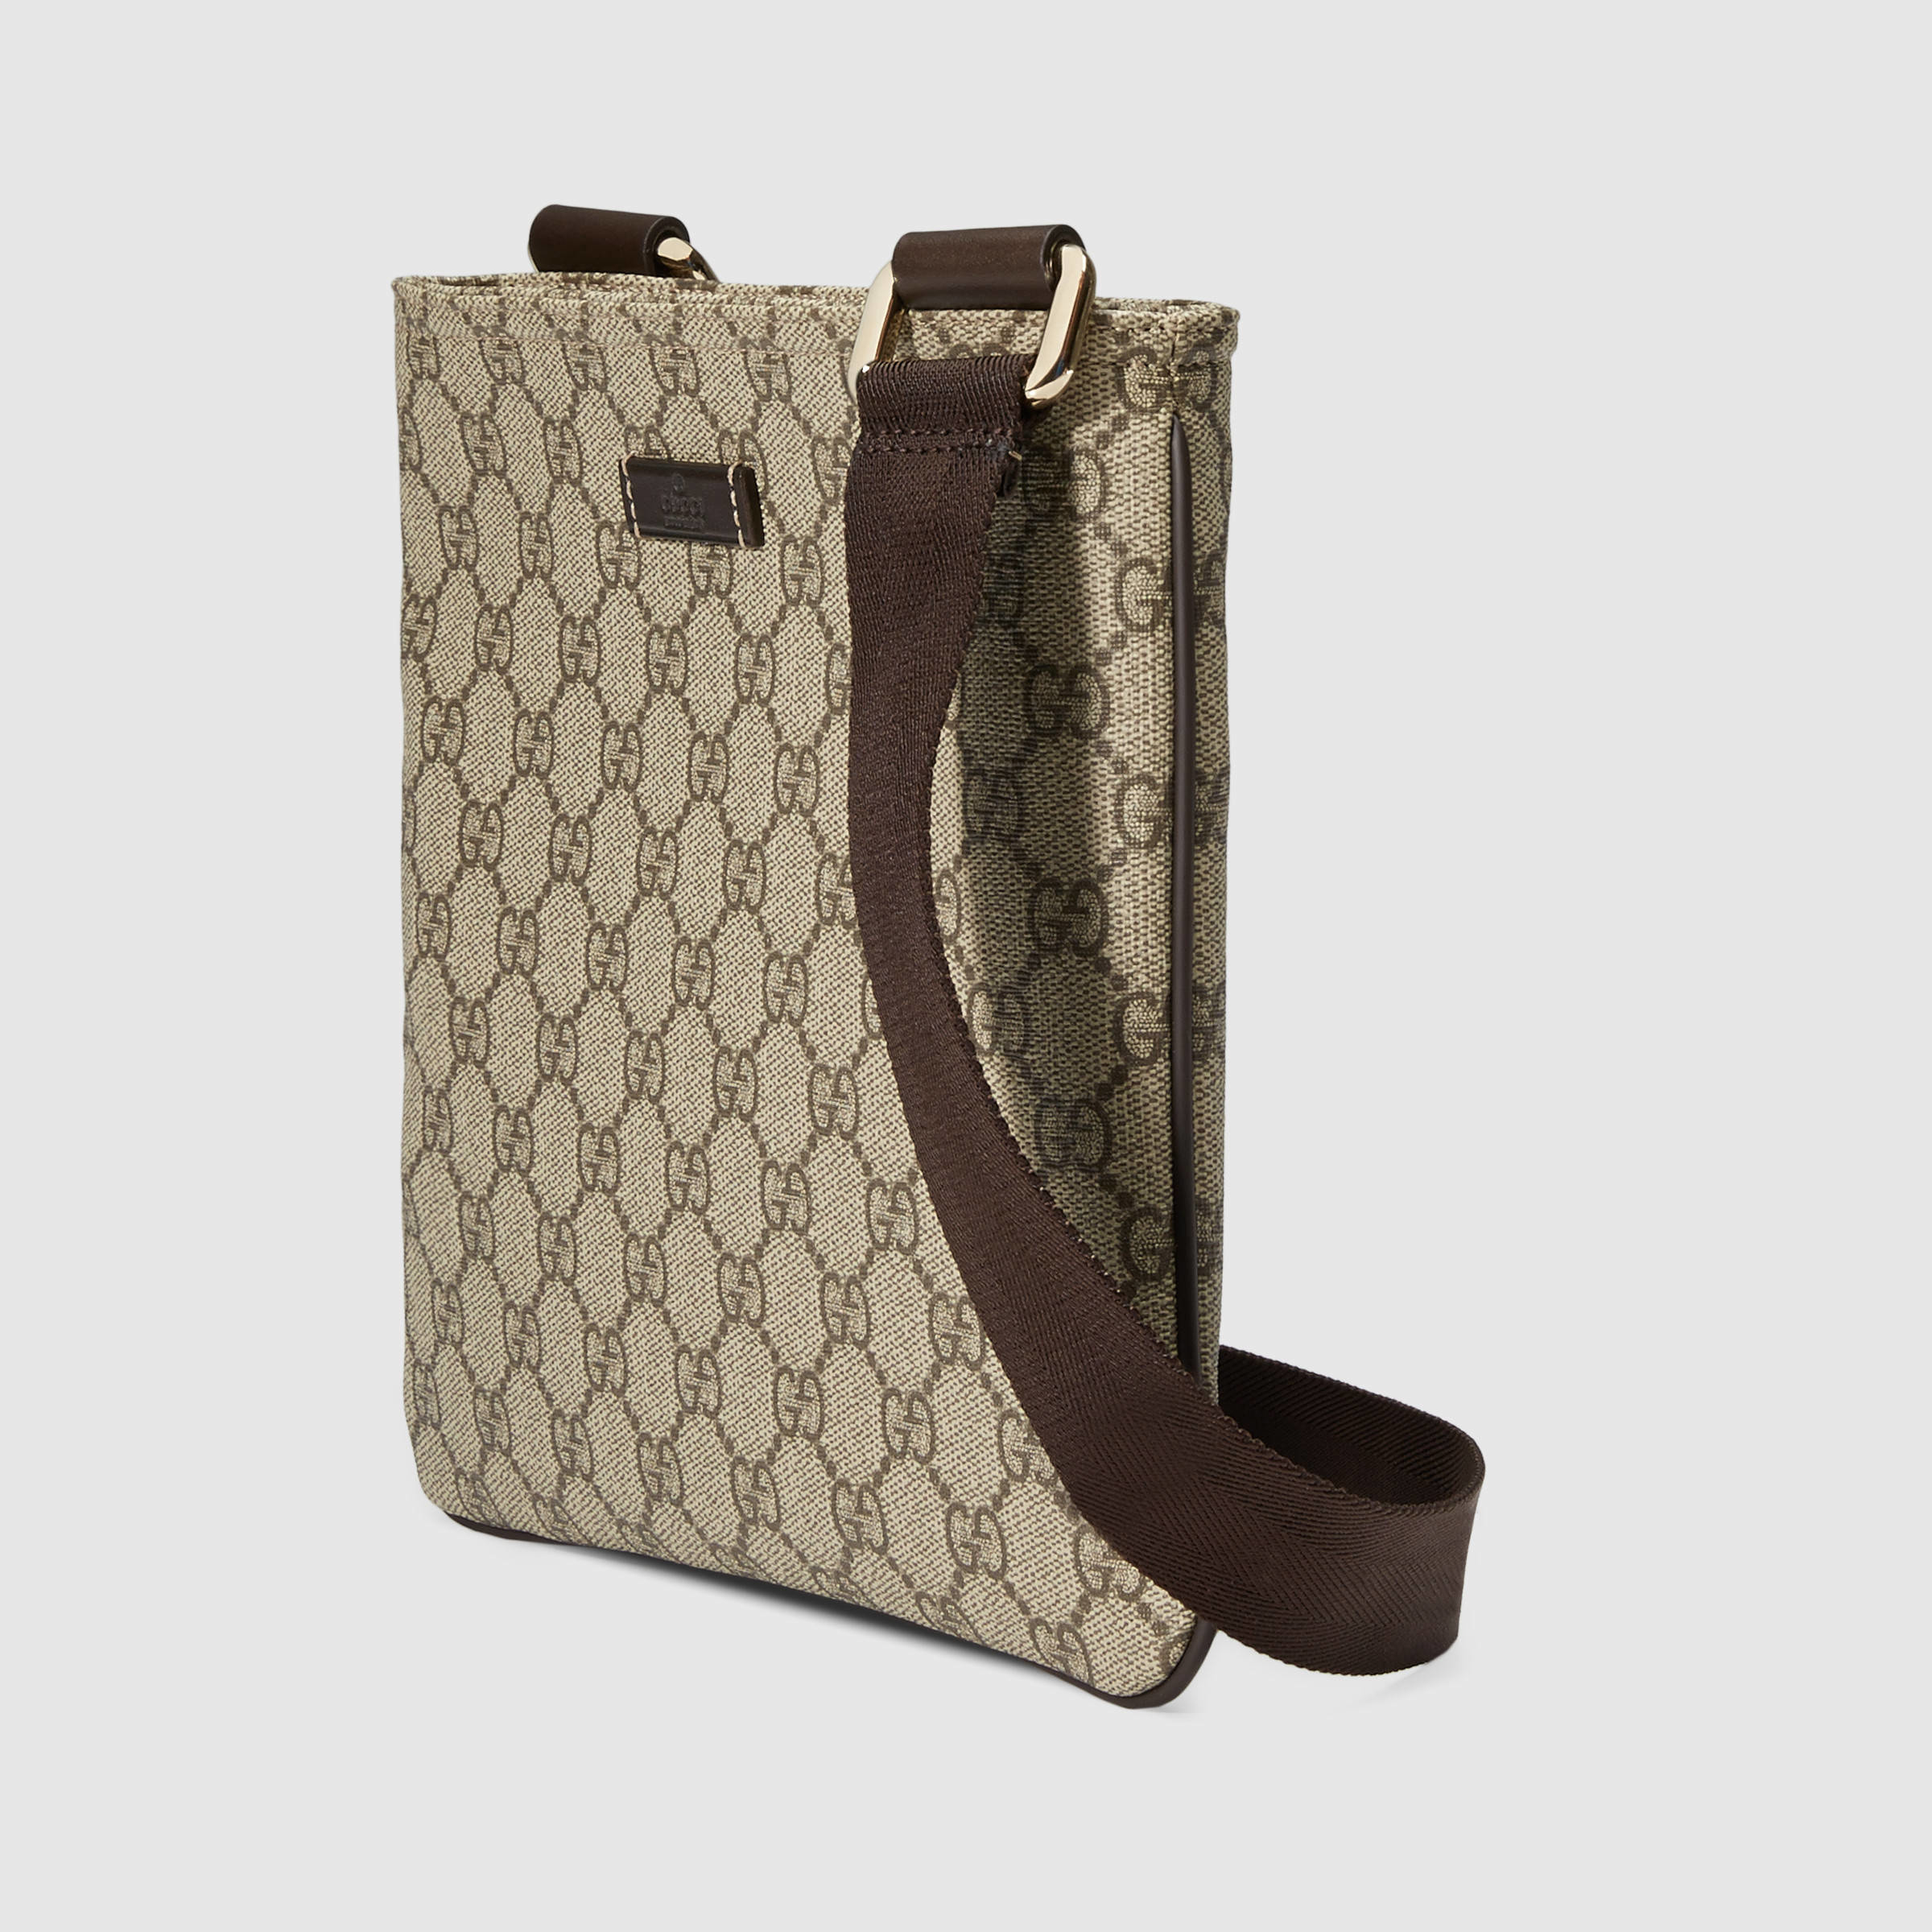 Gucci Leather Gg Supreme Cross Body Messenger Bag for Men - Lyst